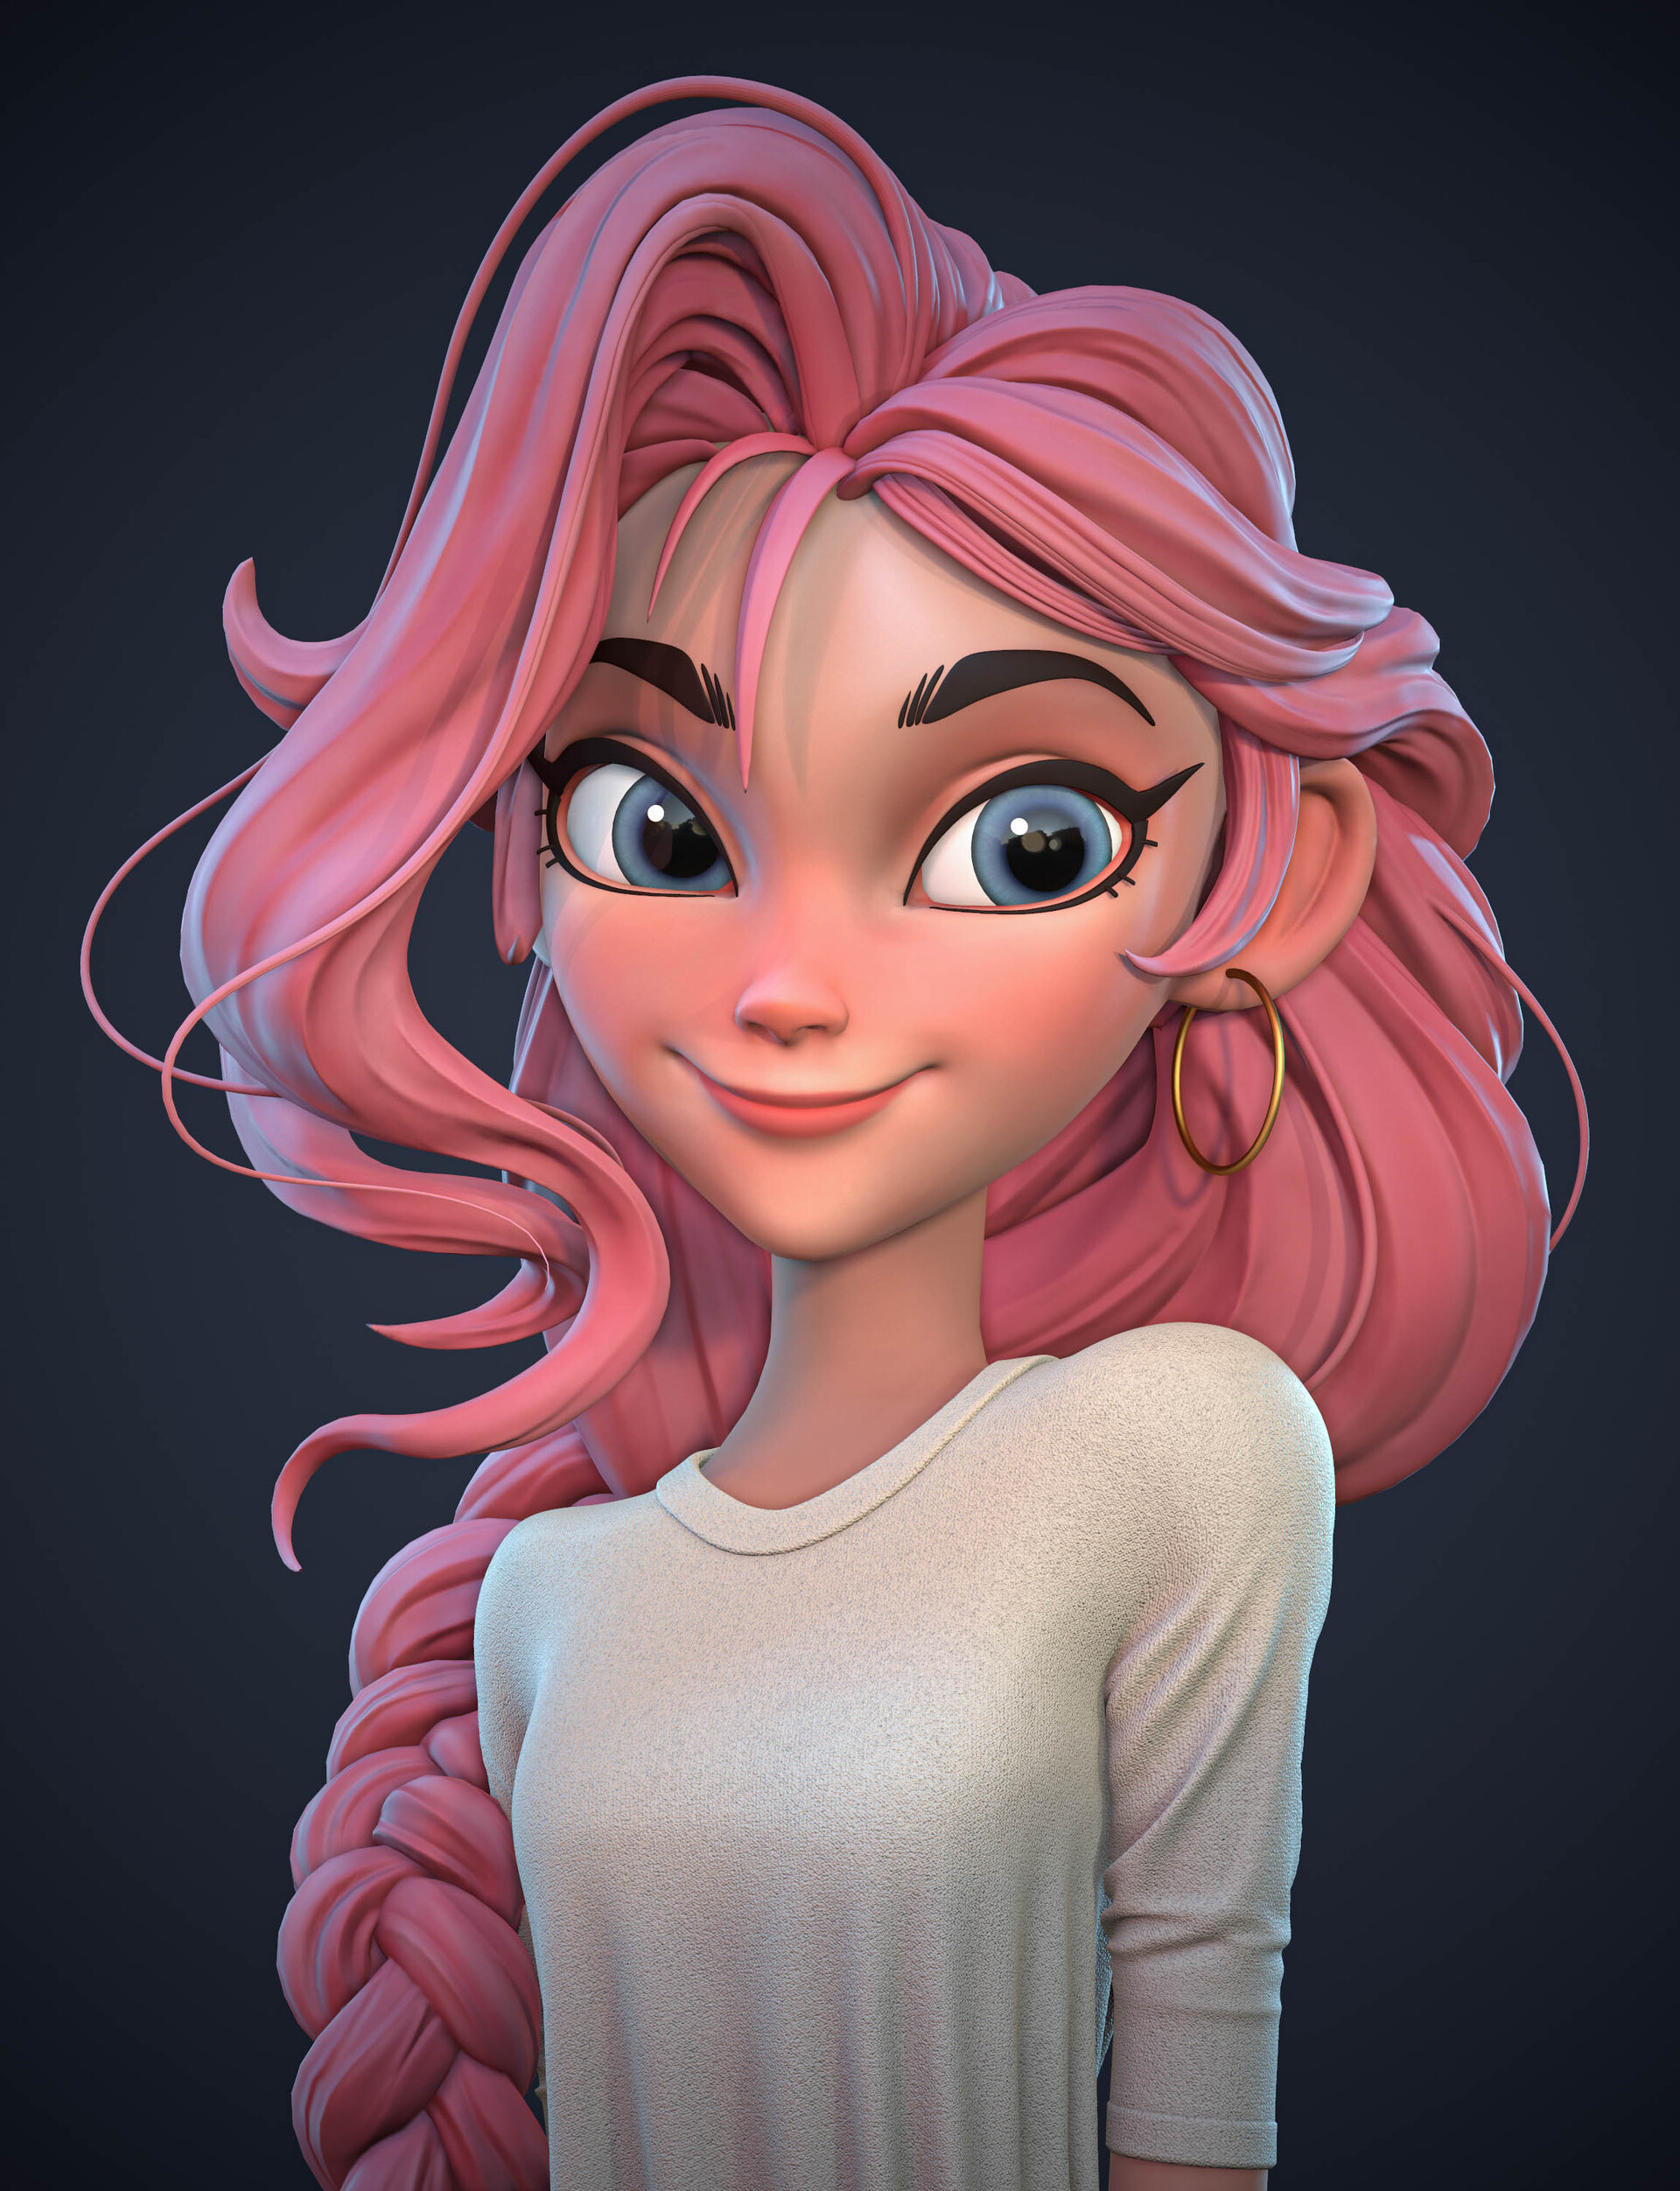 ArtStation - Little girl with pink hair